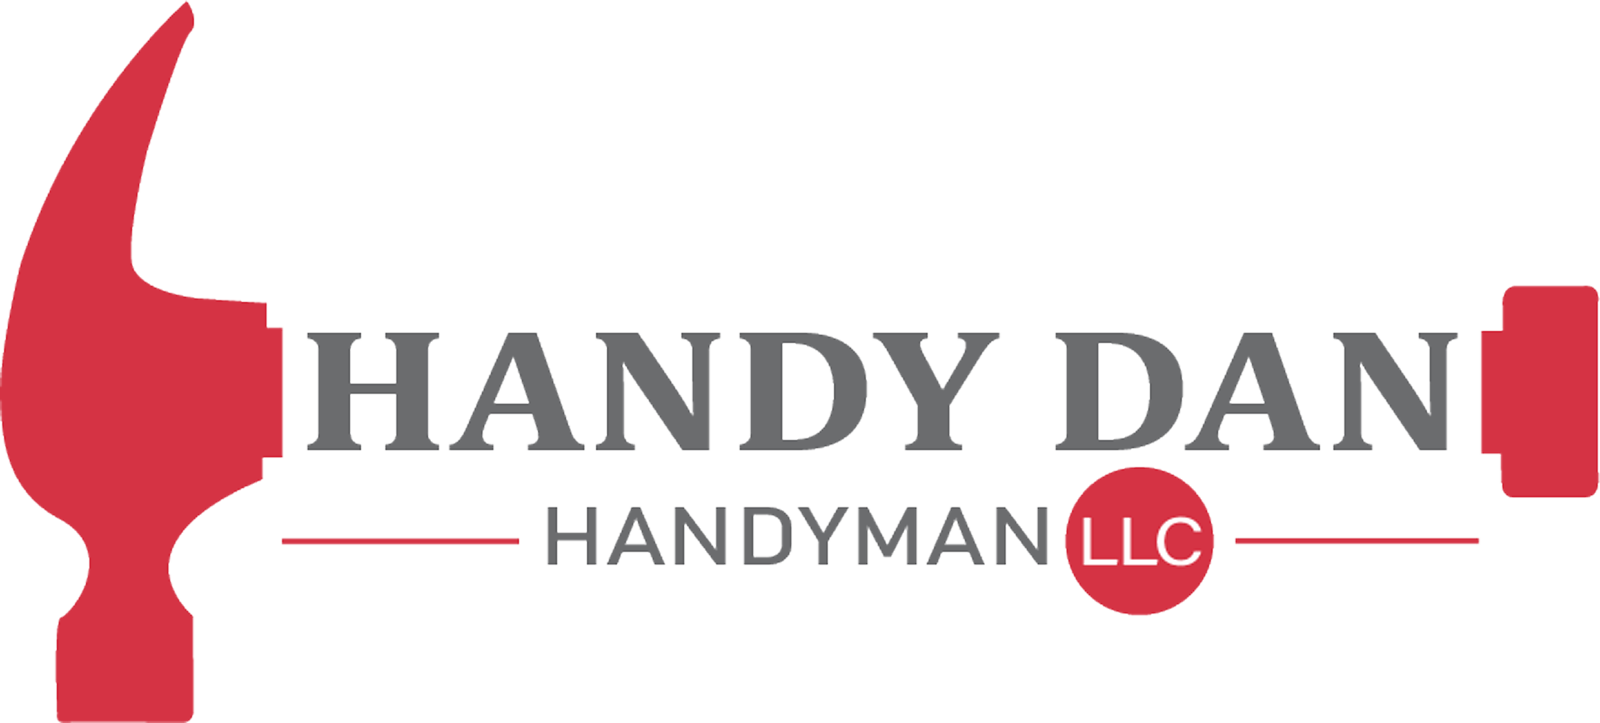 Handy Dan Handyman, LLC | Handyman & Home Improvement Contractor in Rogers MN